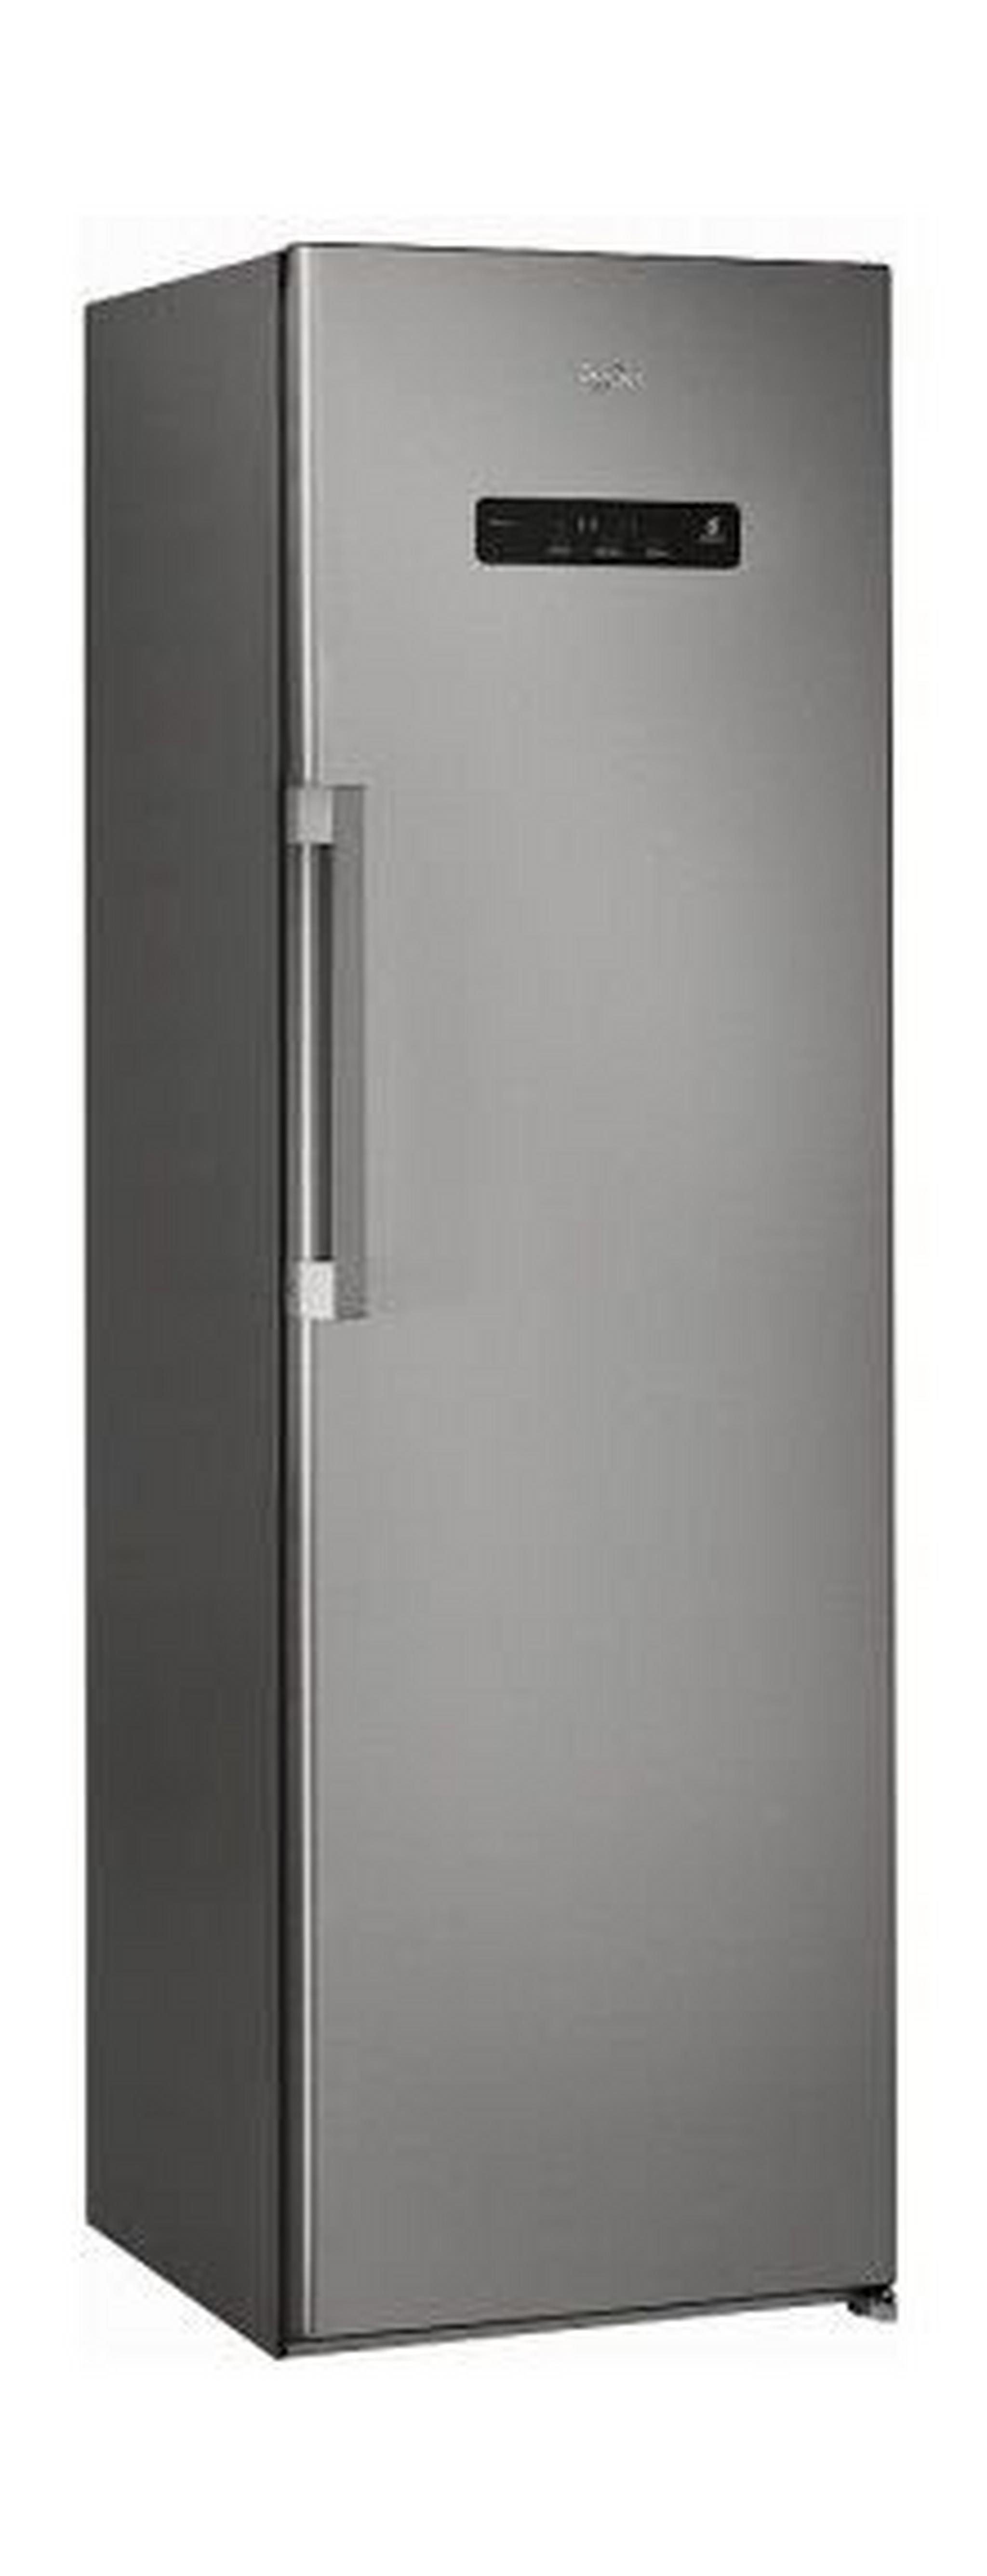 Whirlpool 13 Cft. Single Door Refrigerator (WME36962) - Silver